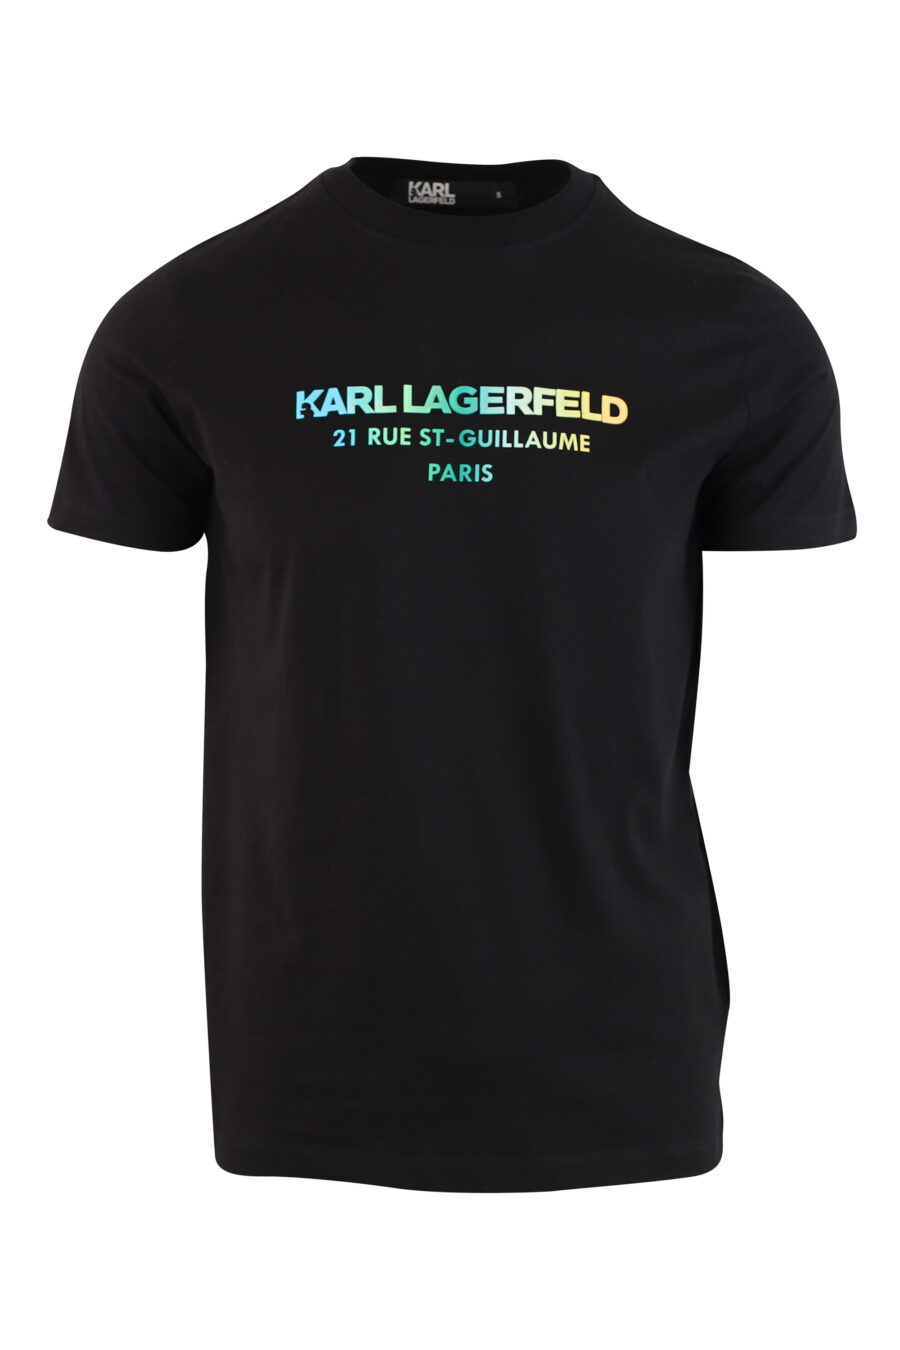 Camiseta negra con logo holográfico "rue st guillaume" - IMG 9824